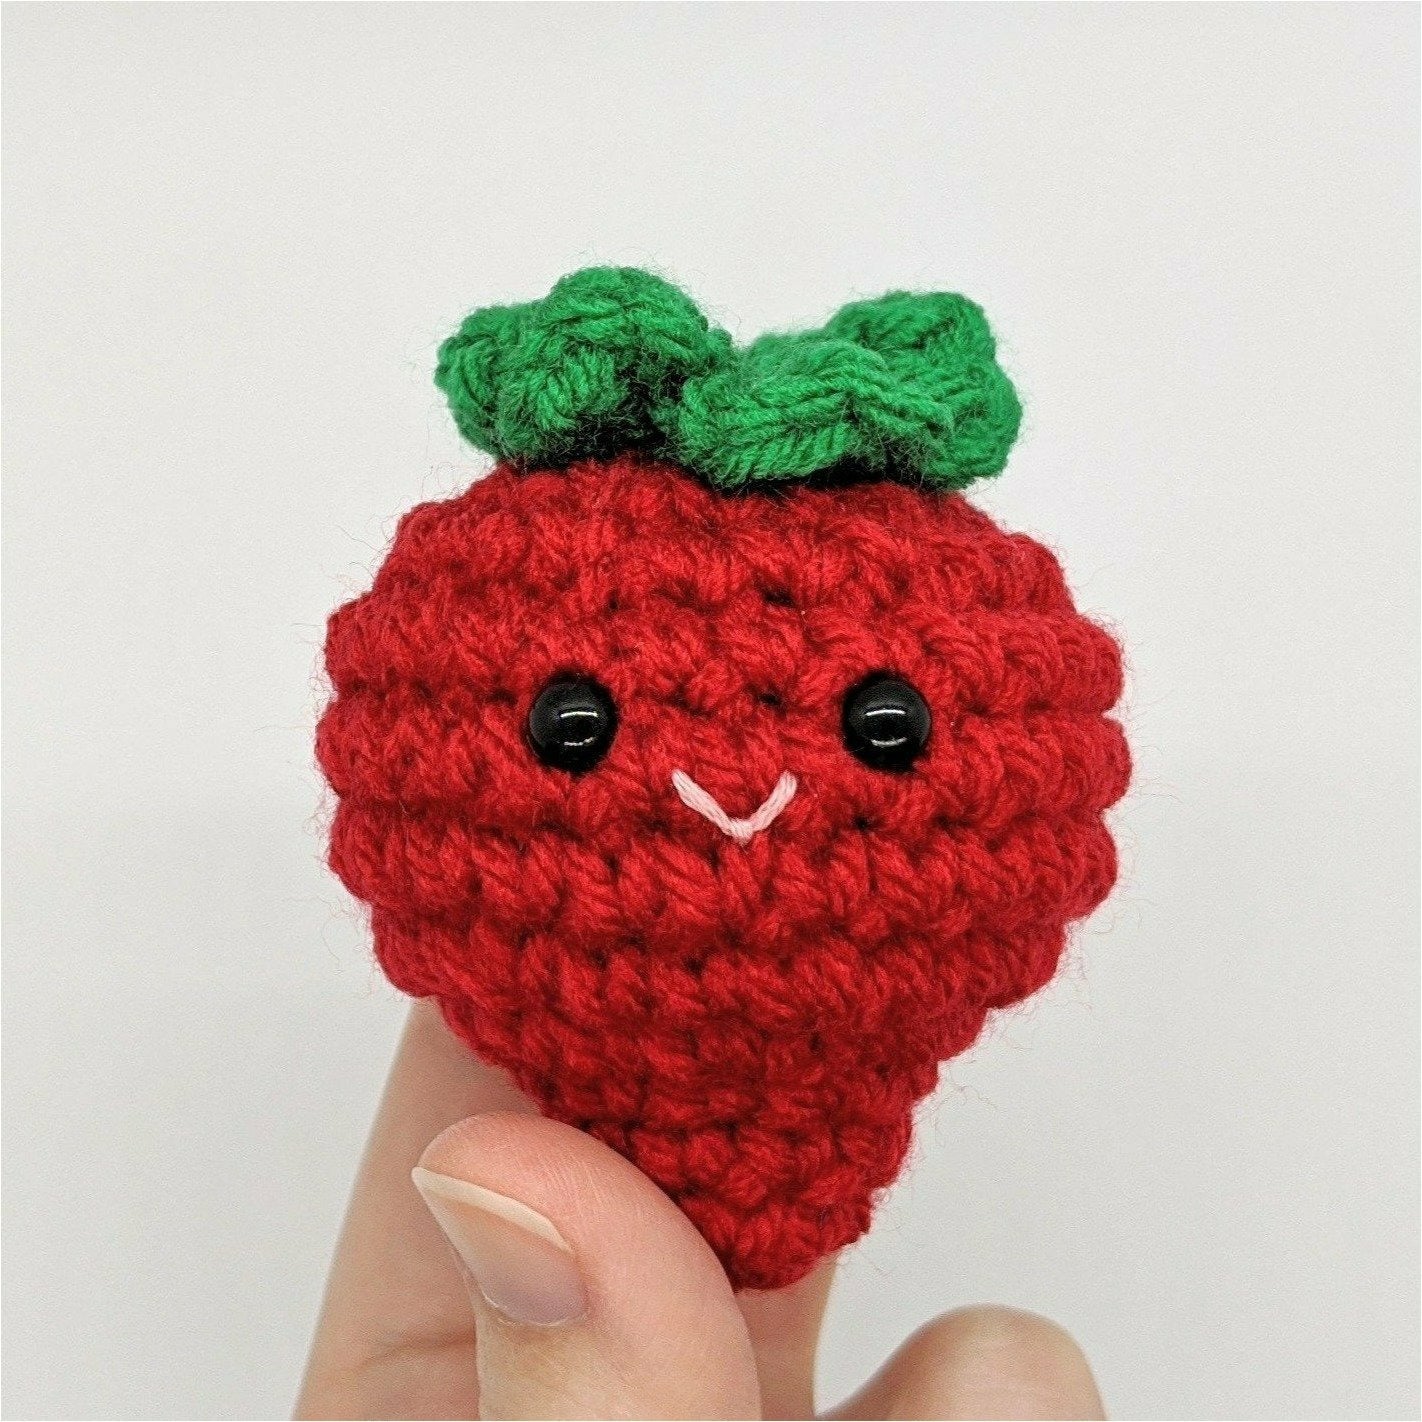 CROCHET PATTERN: Beginner Crochet Berries, Amigurumi Kawaii Play Fo